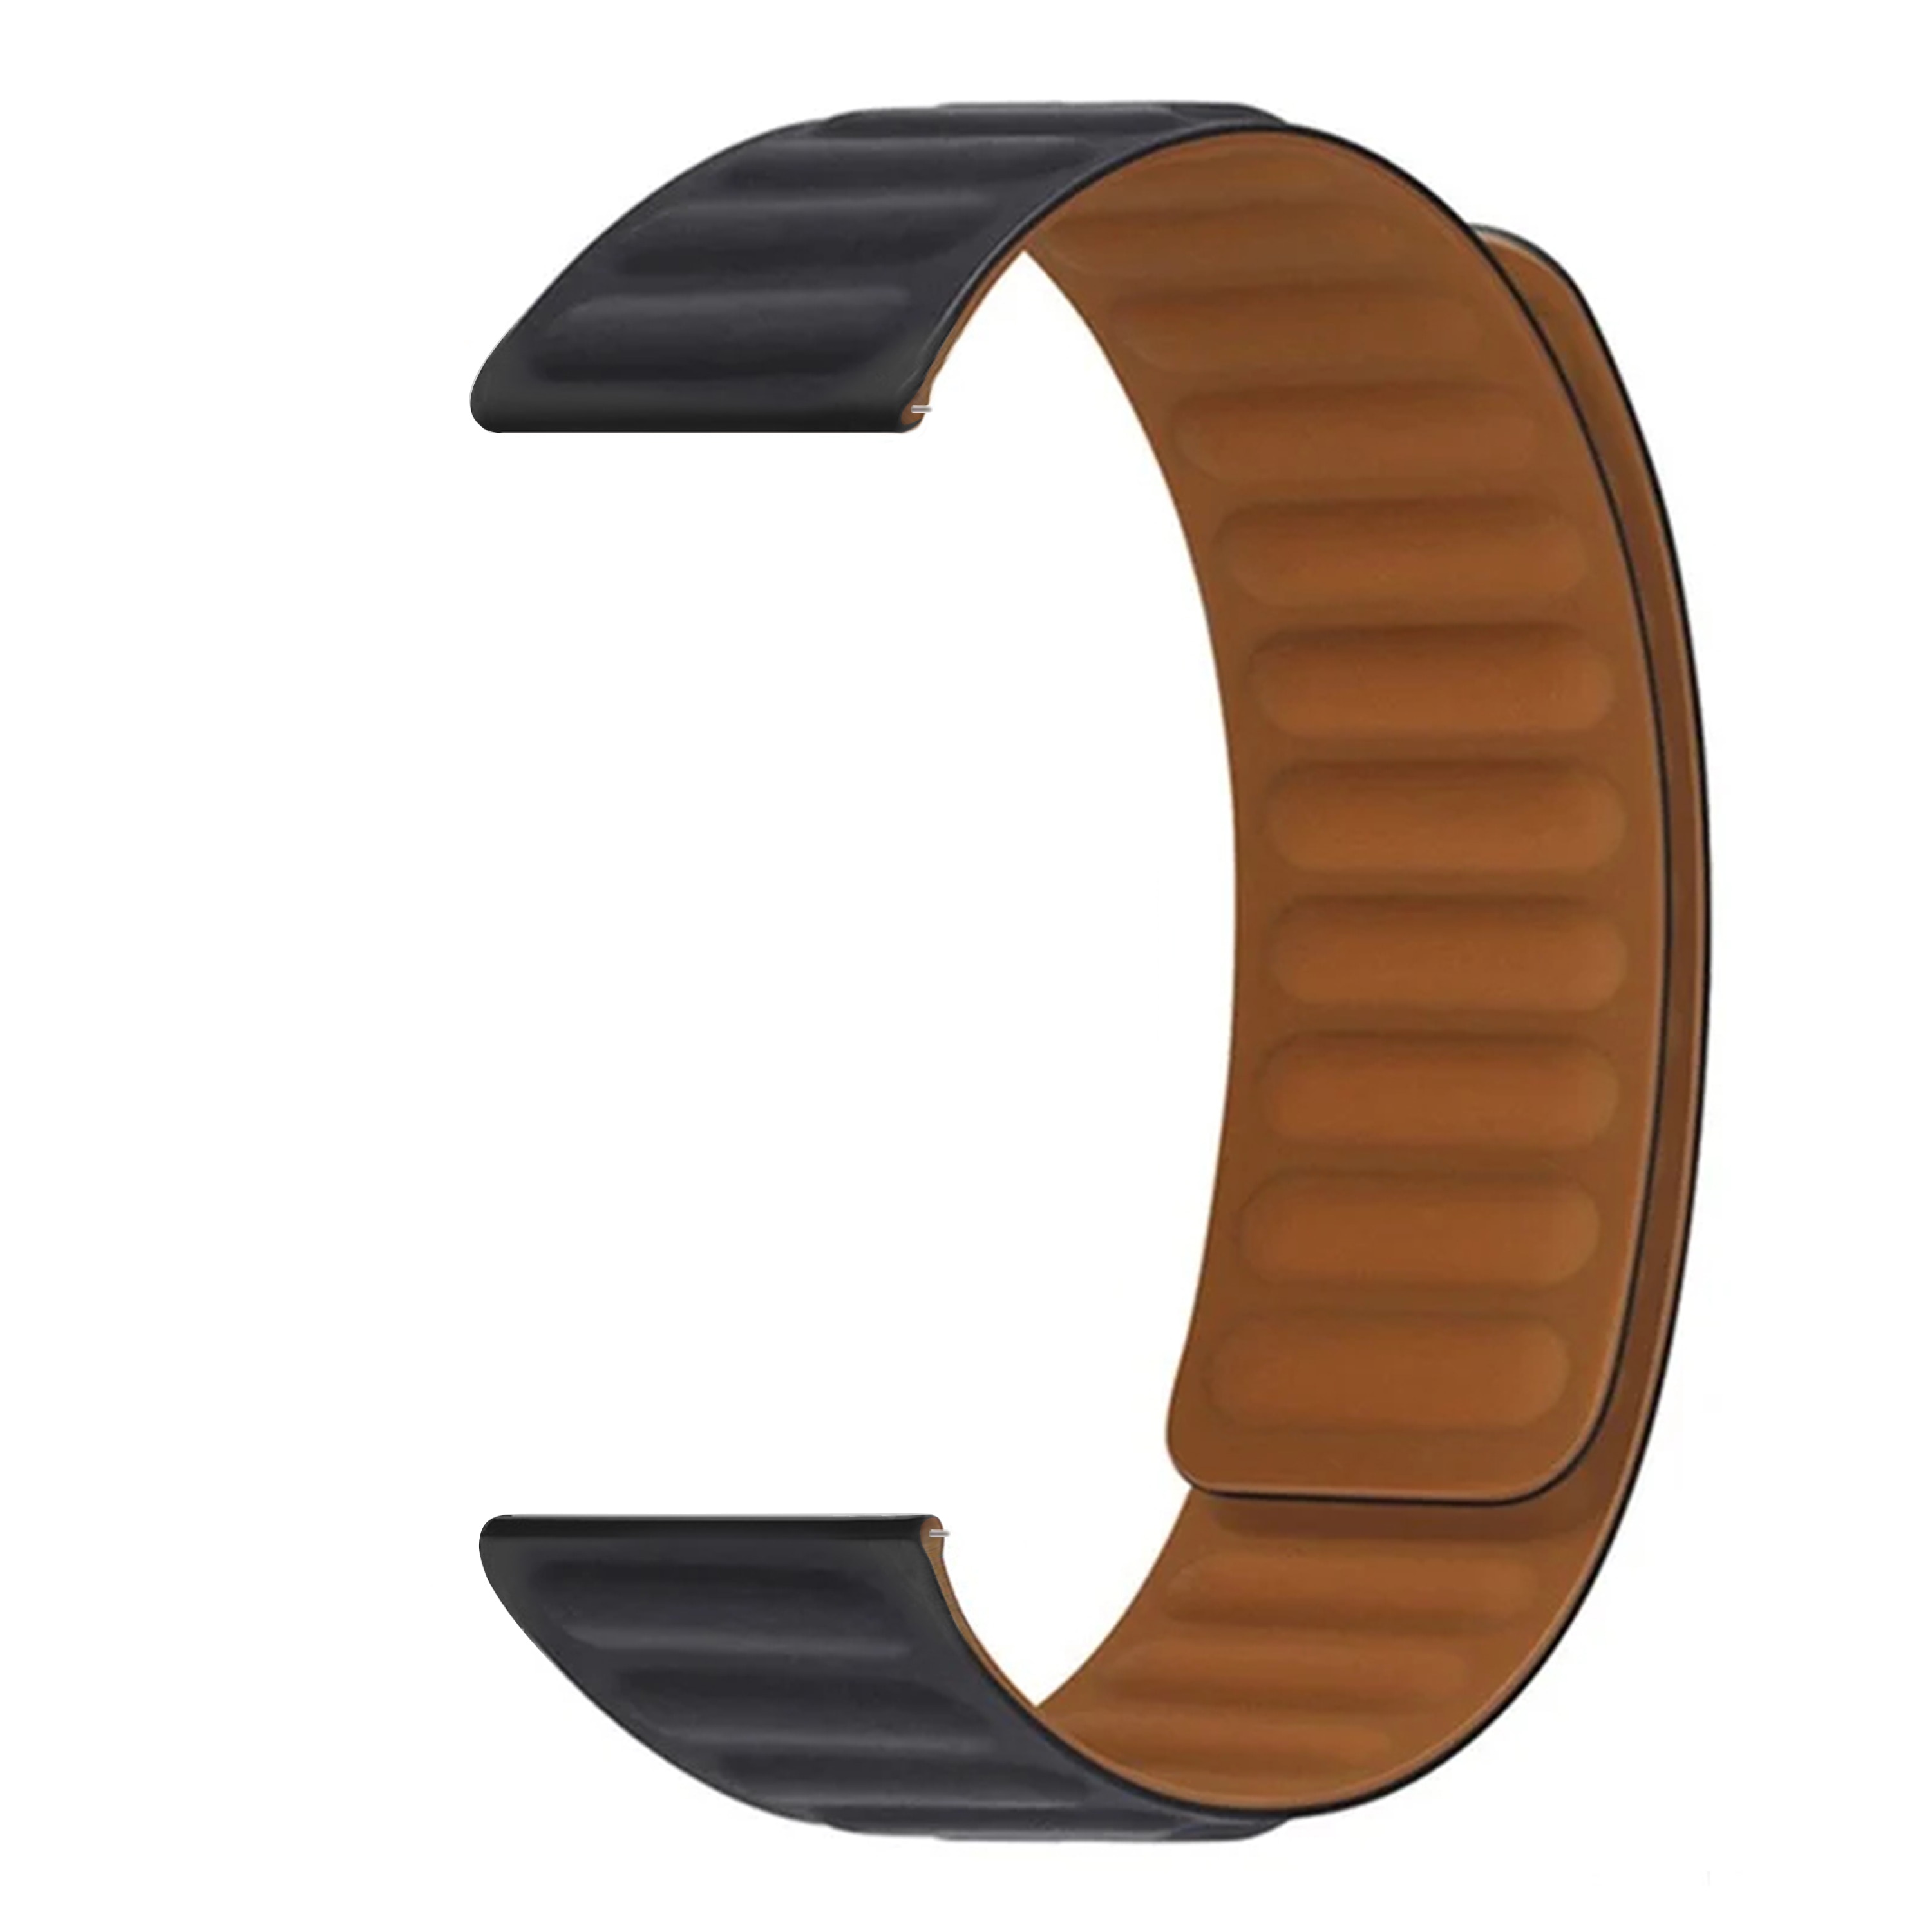 Suunto Race Magnetische Armband aus Silikon schwarz